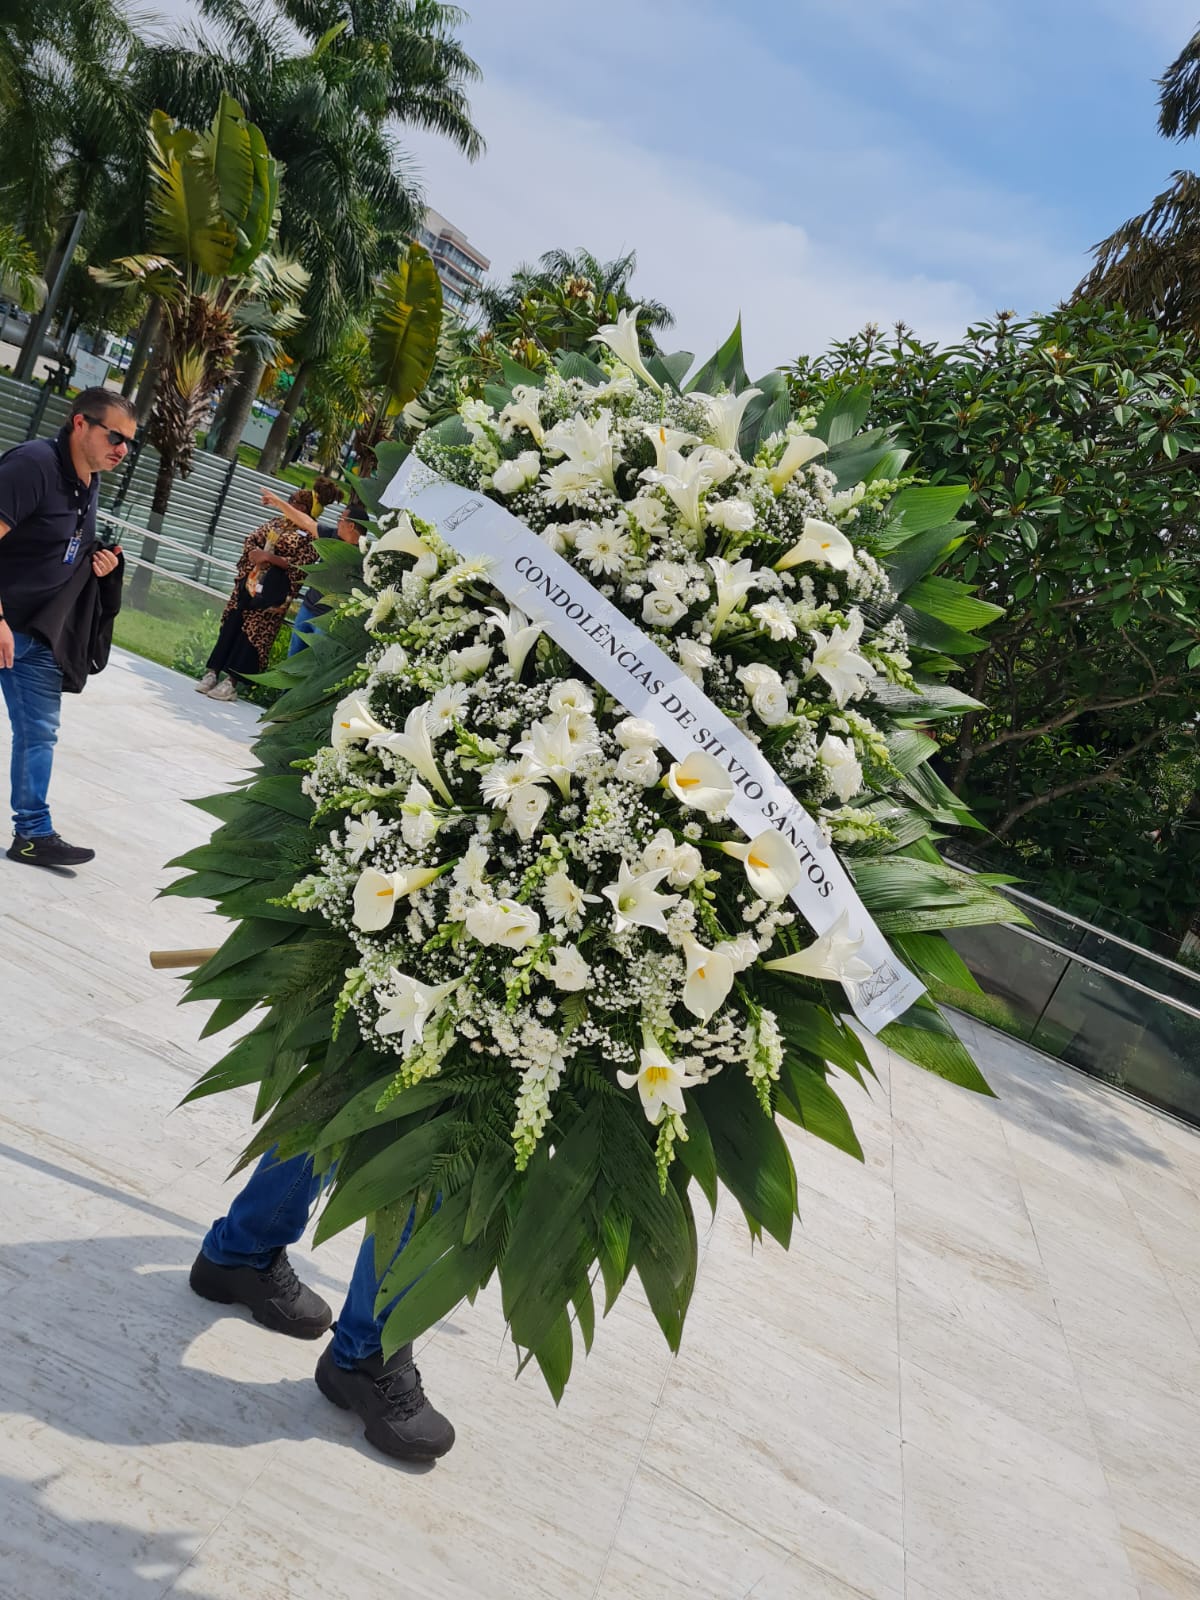 Coroa de flores enviada por Silvio Santos. Foto: Isabela Frasinelli - iG Gente 11/11/2022